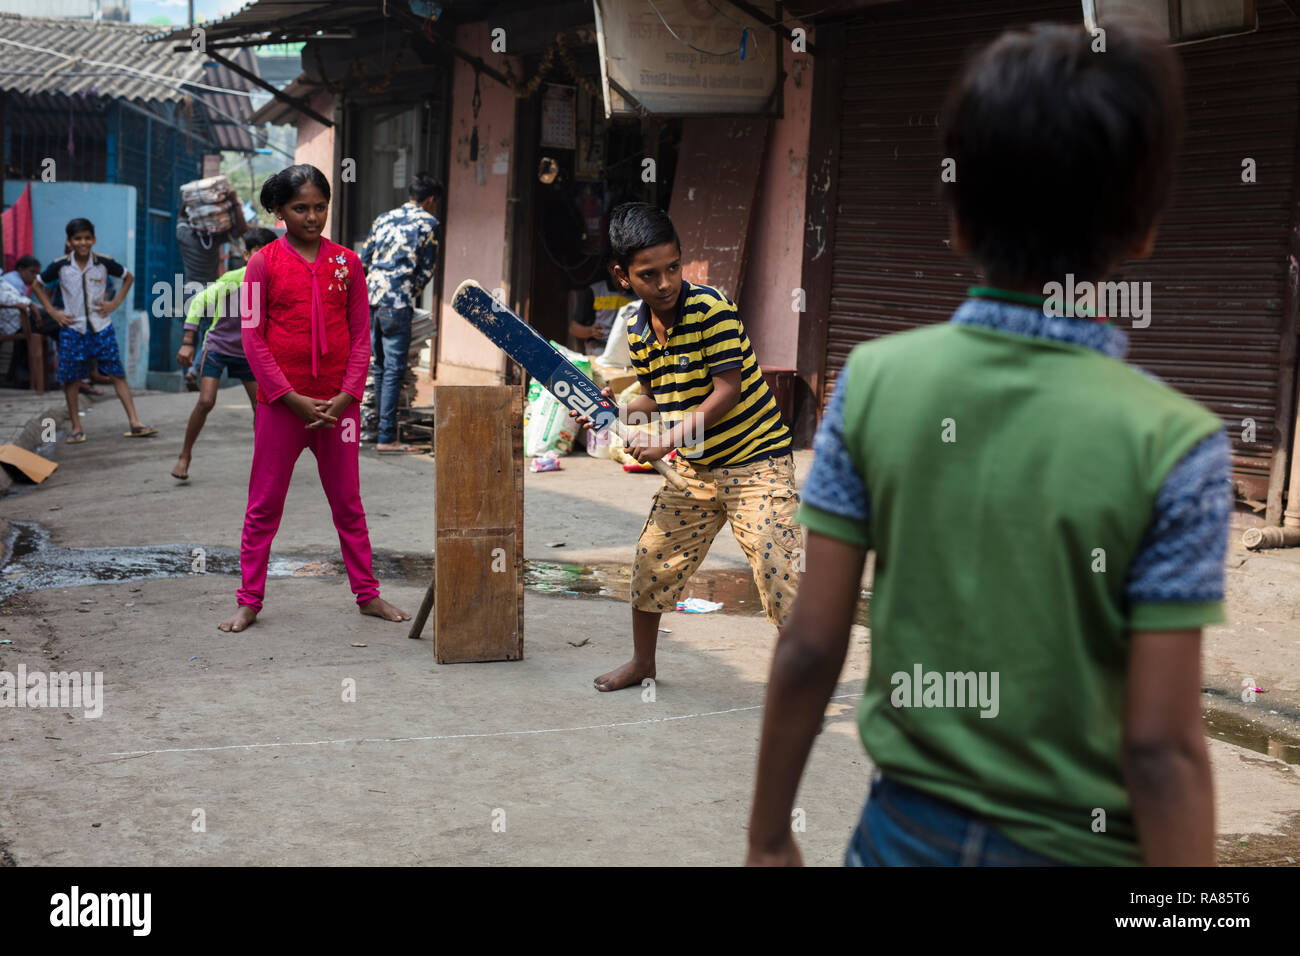 Mumbai, Maharashtra / India - December 12 2017: Children playing so-called „gully cricket“ in a small street in a slum in Mumbai. Stock Photo